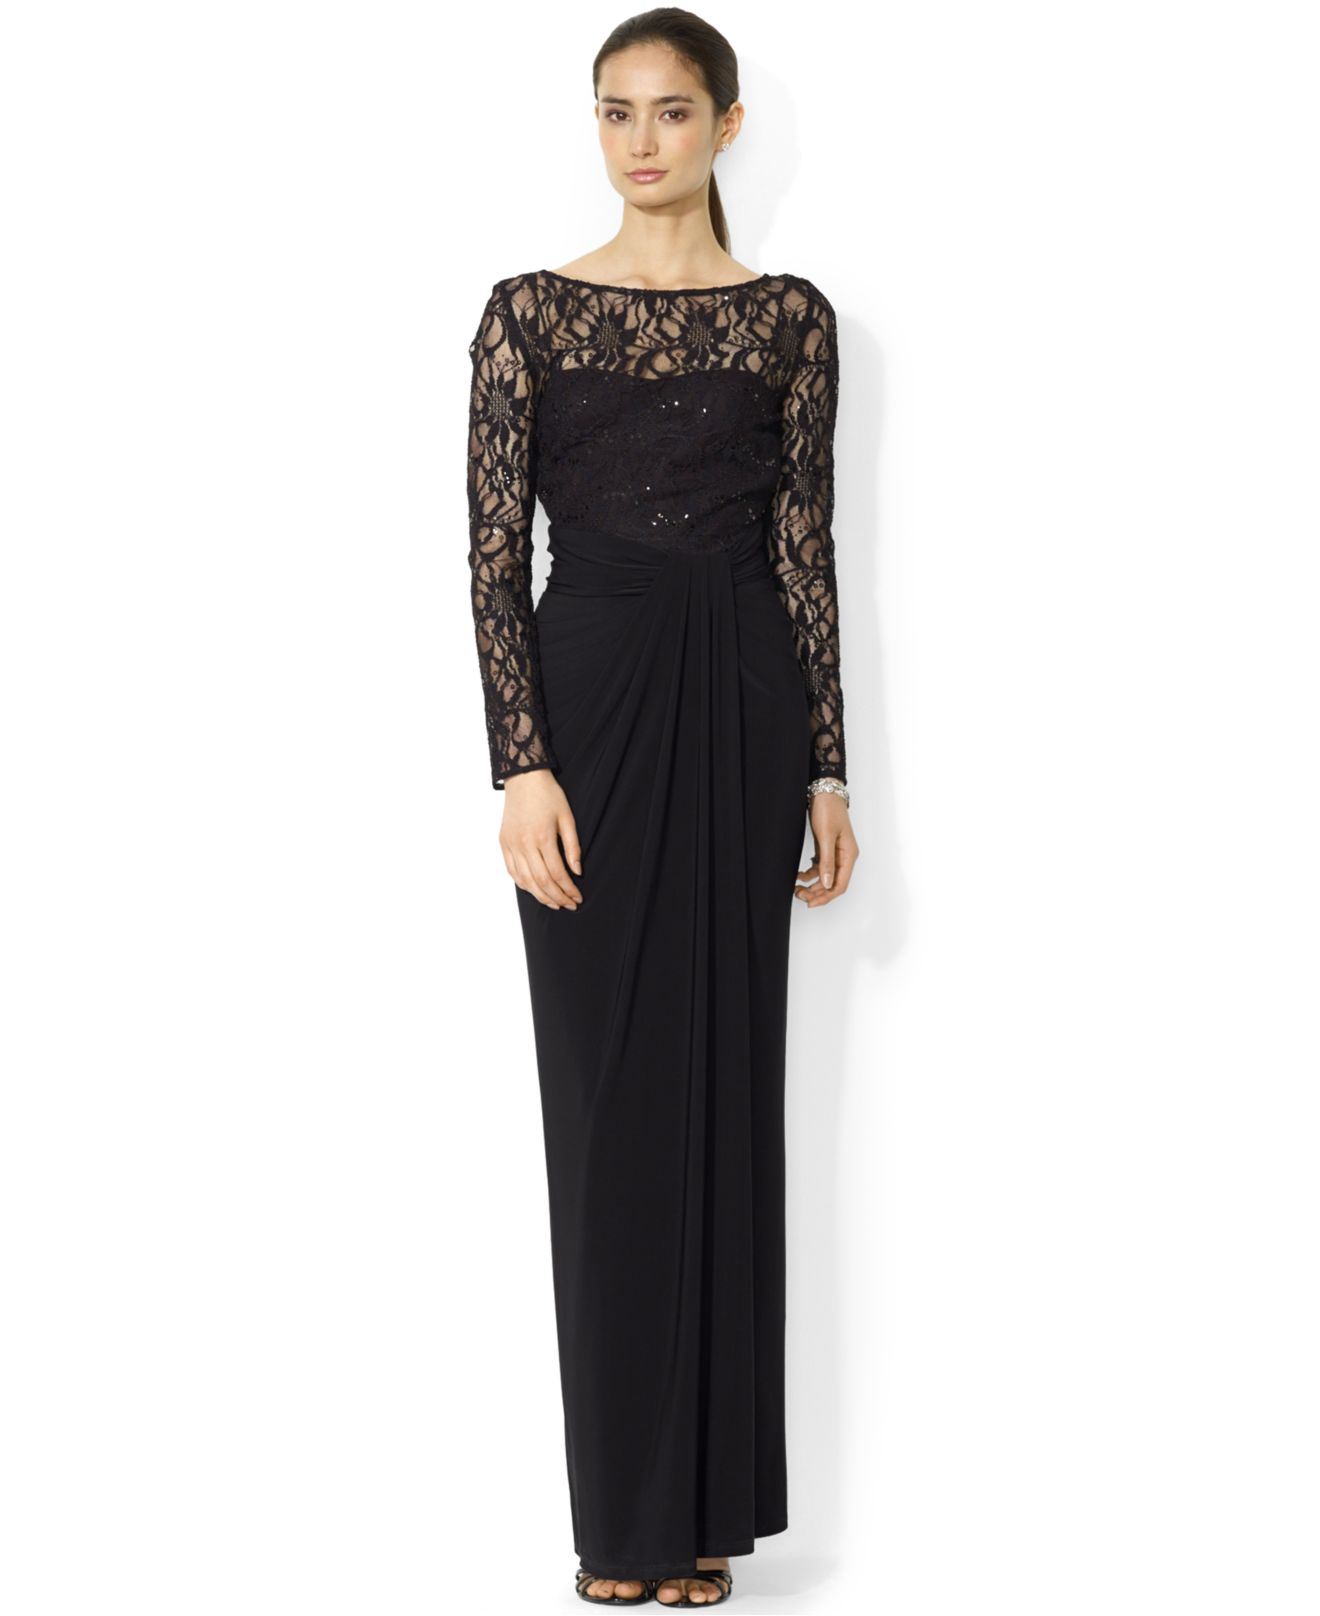 Lyst - Lauren by ralph lauren Long-Sleeve Lace V-Back Gown in Black